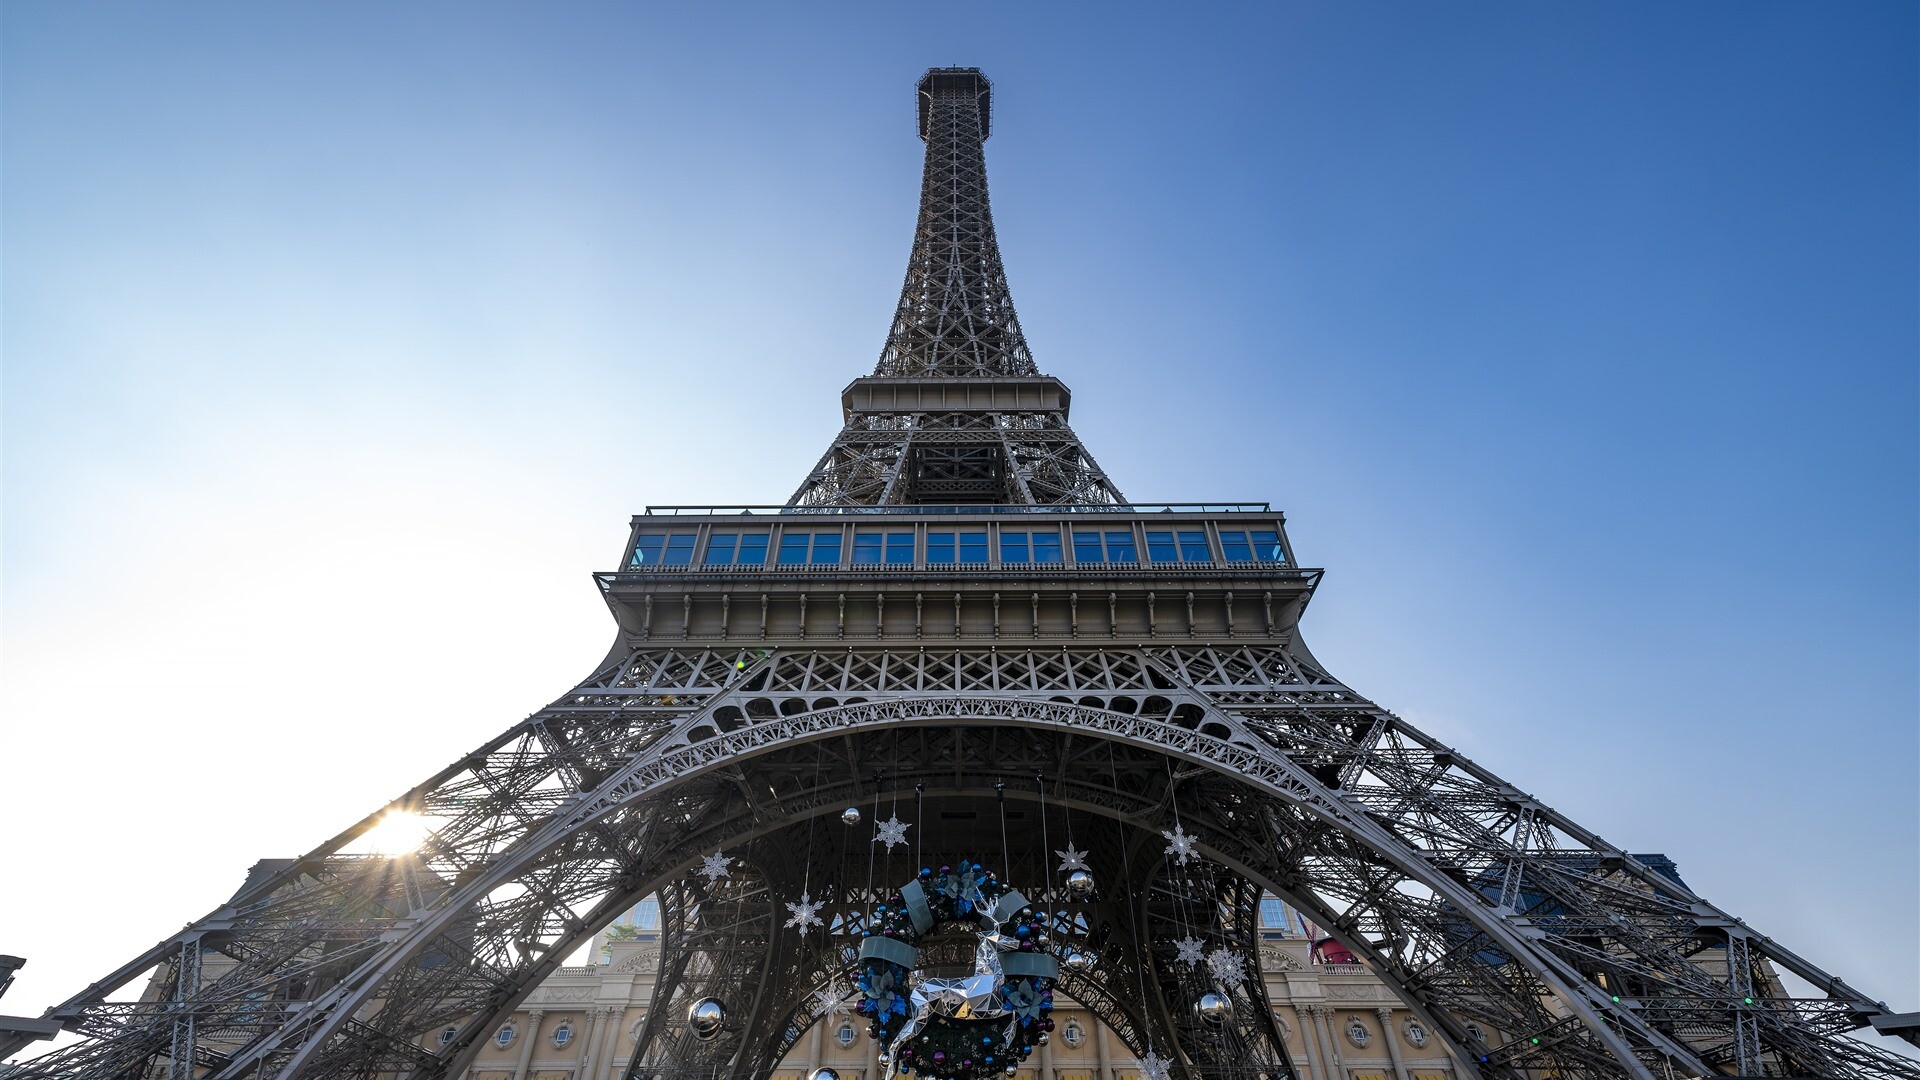 Eiffel Tower: Paris' most famous attraction, Champ de Mars. 1920x1080 Full HD Wallpaper.